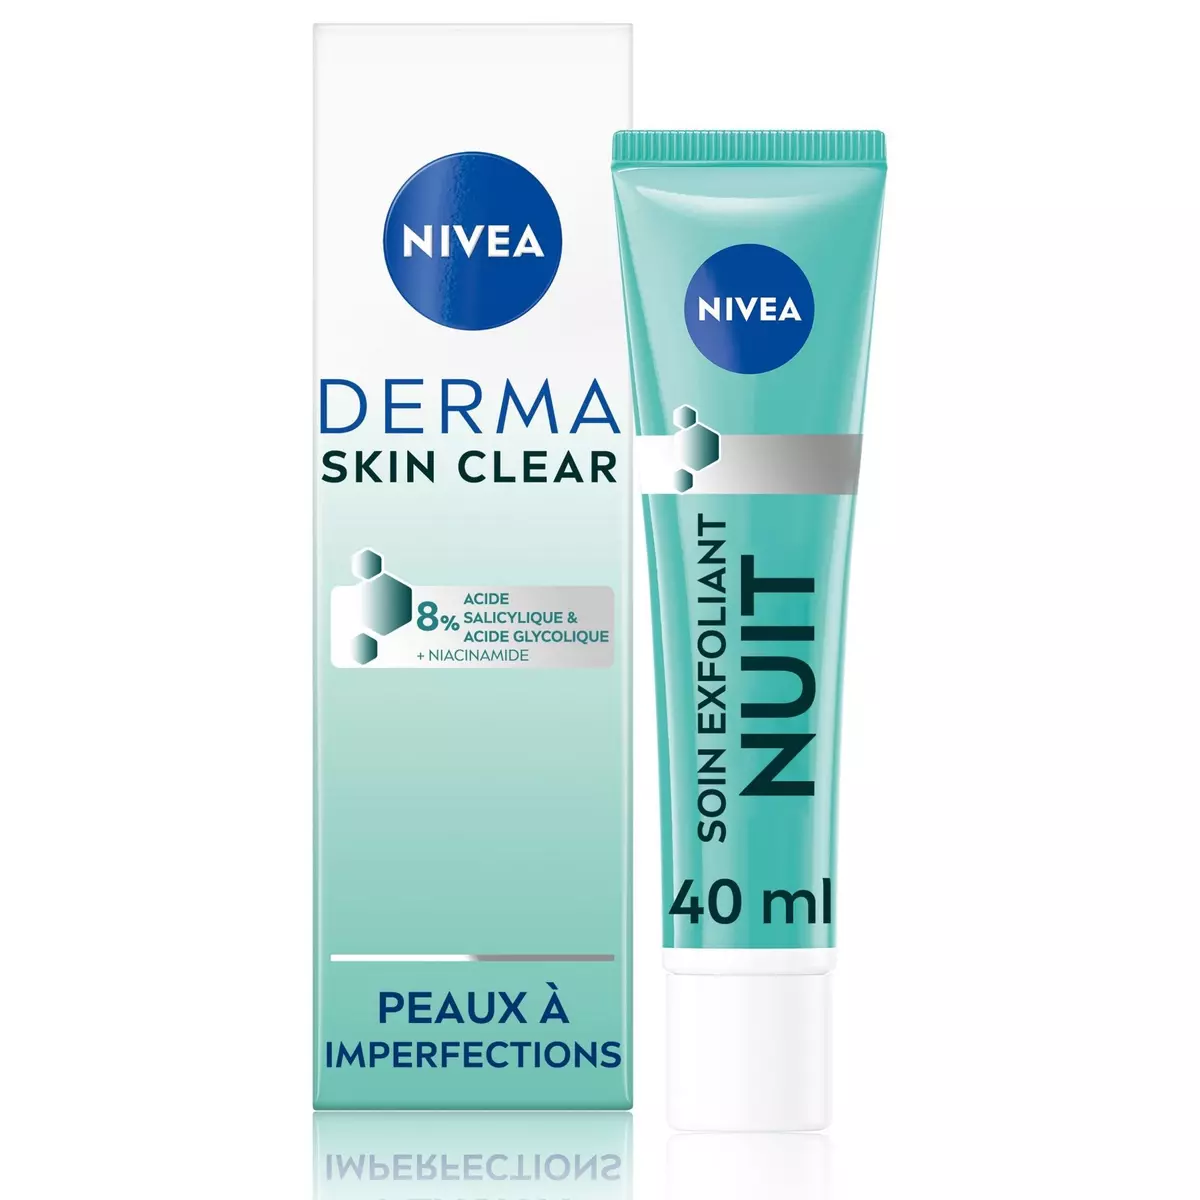 NIVEA Derma Skin Care Soin exfoliant quotidien de nuit 40ml